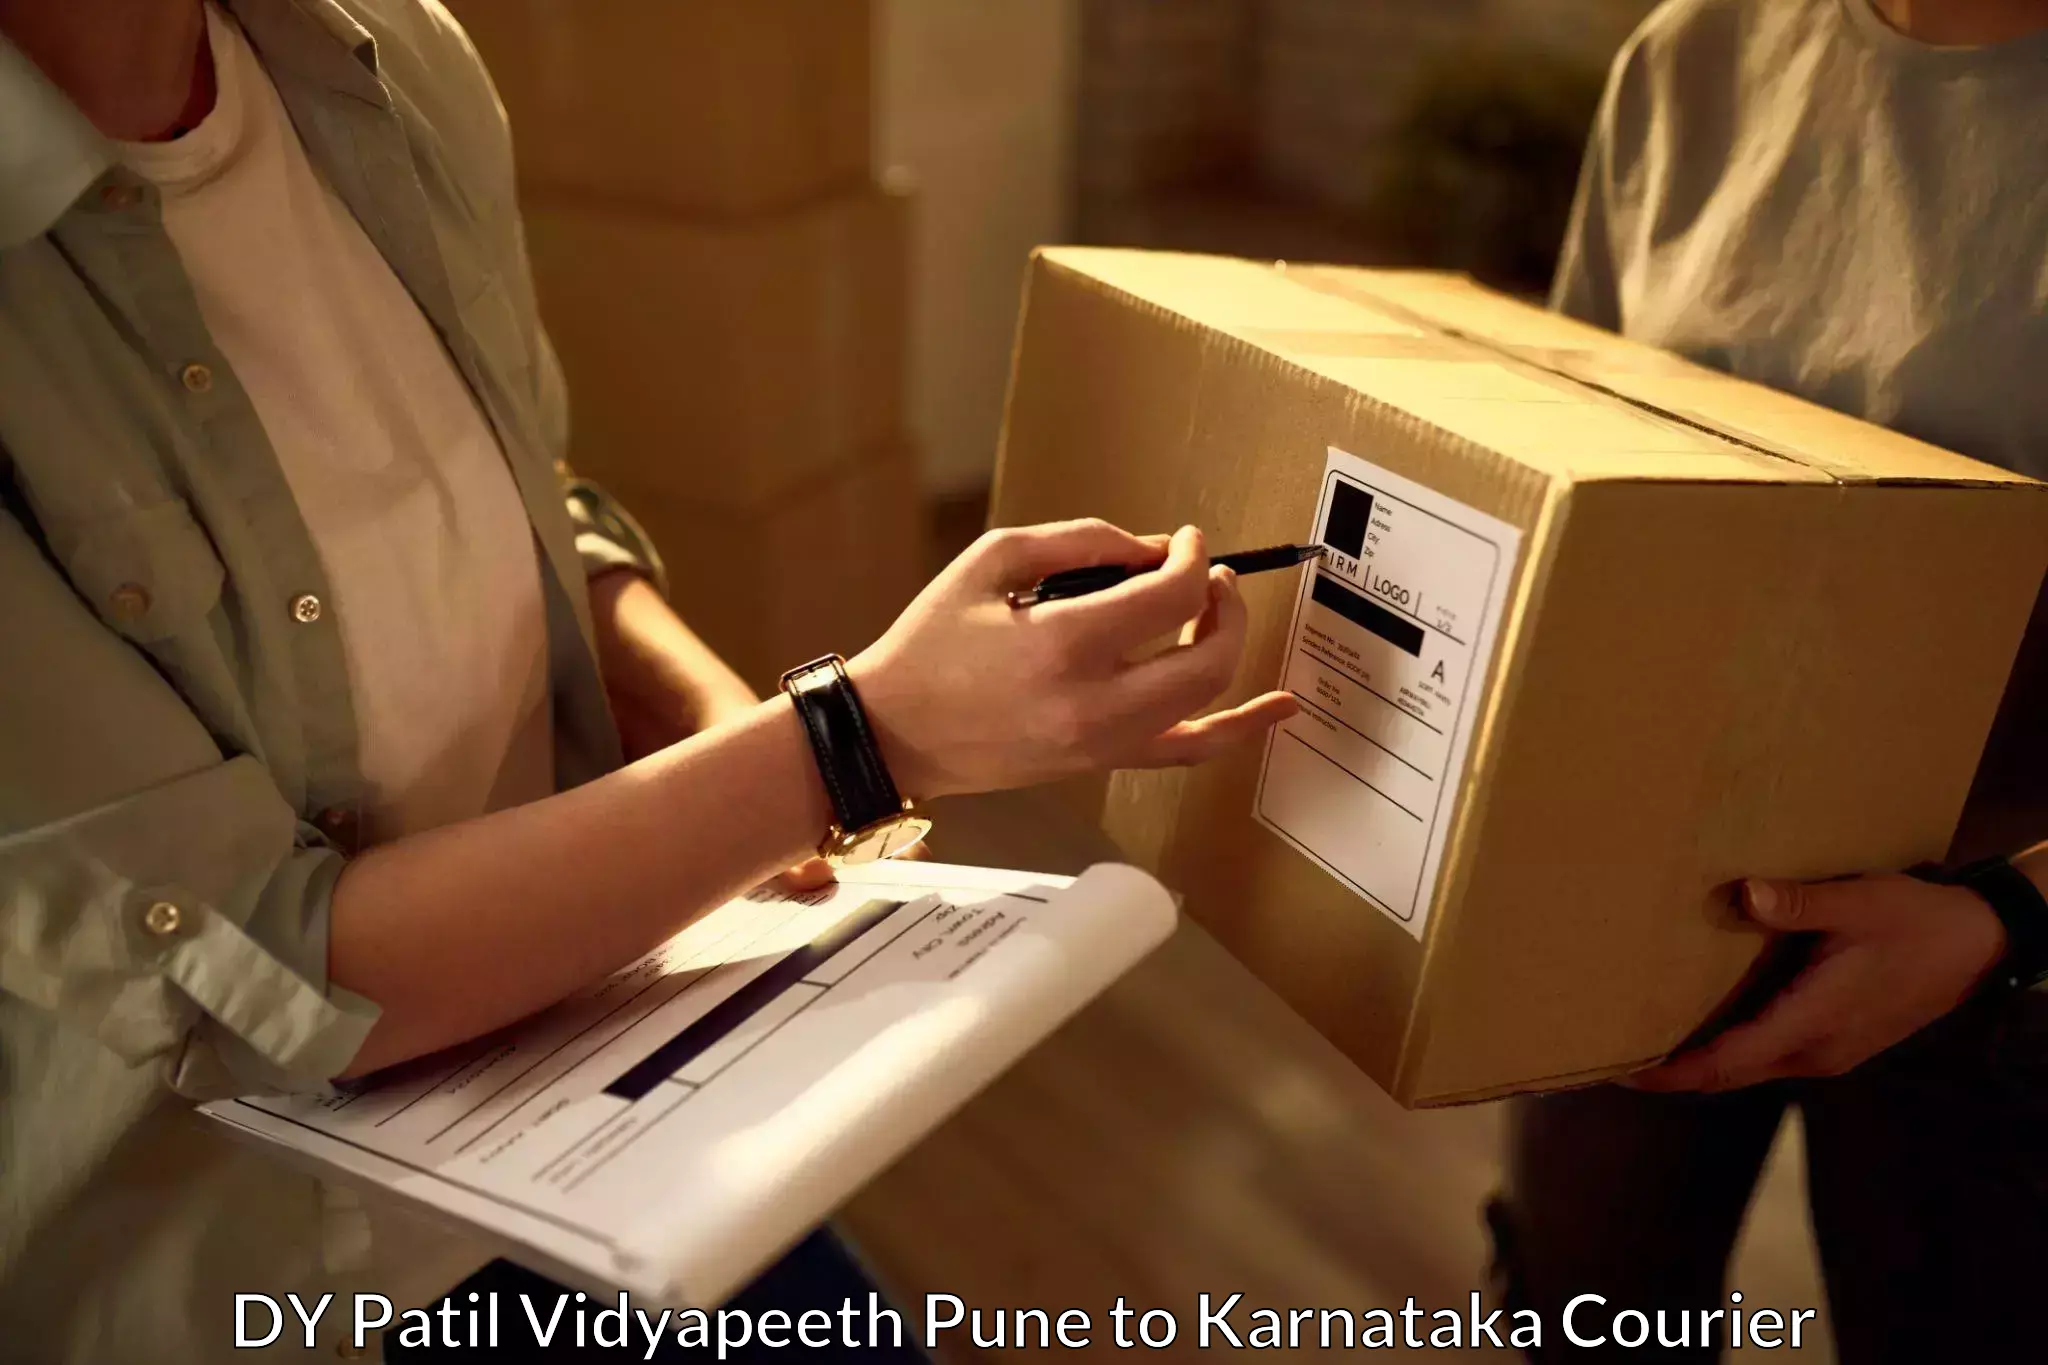 24-hour courier service DY Patil Vidyapeeth Pune to Alnavar